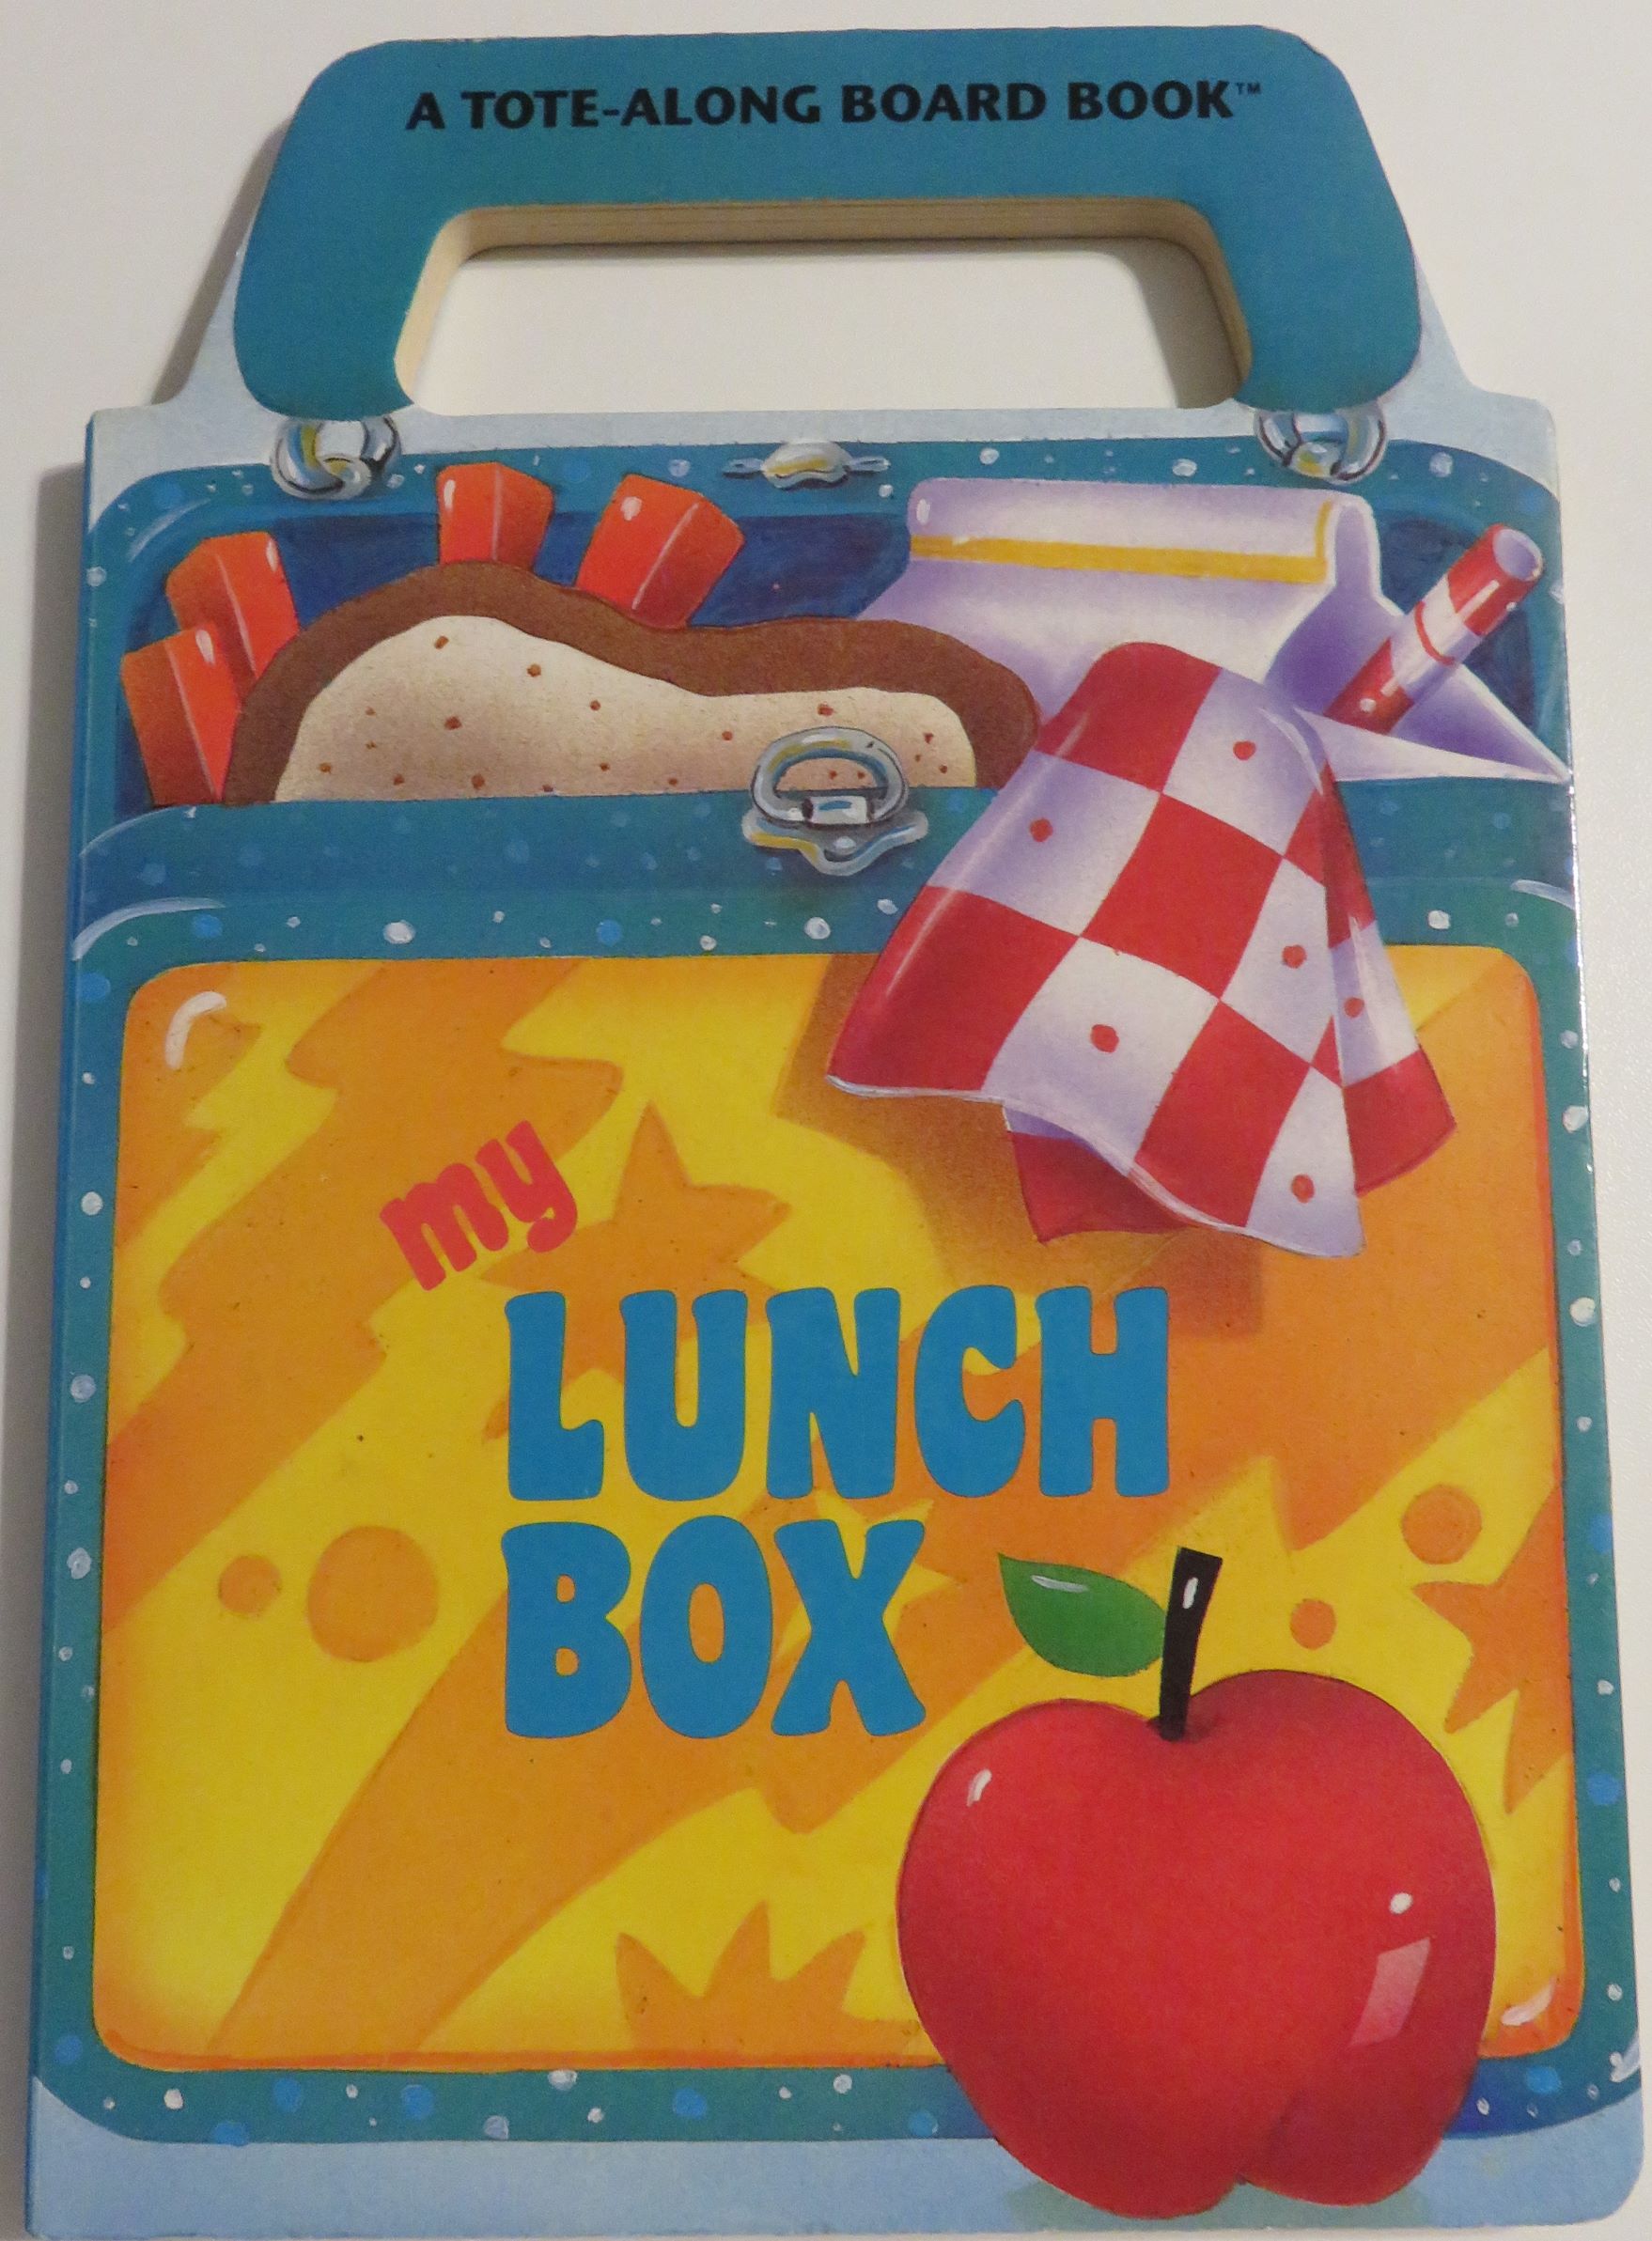 My Lunch Box